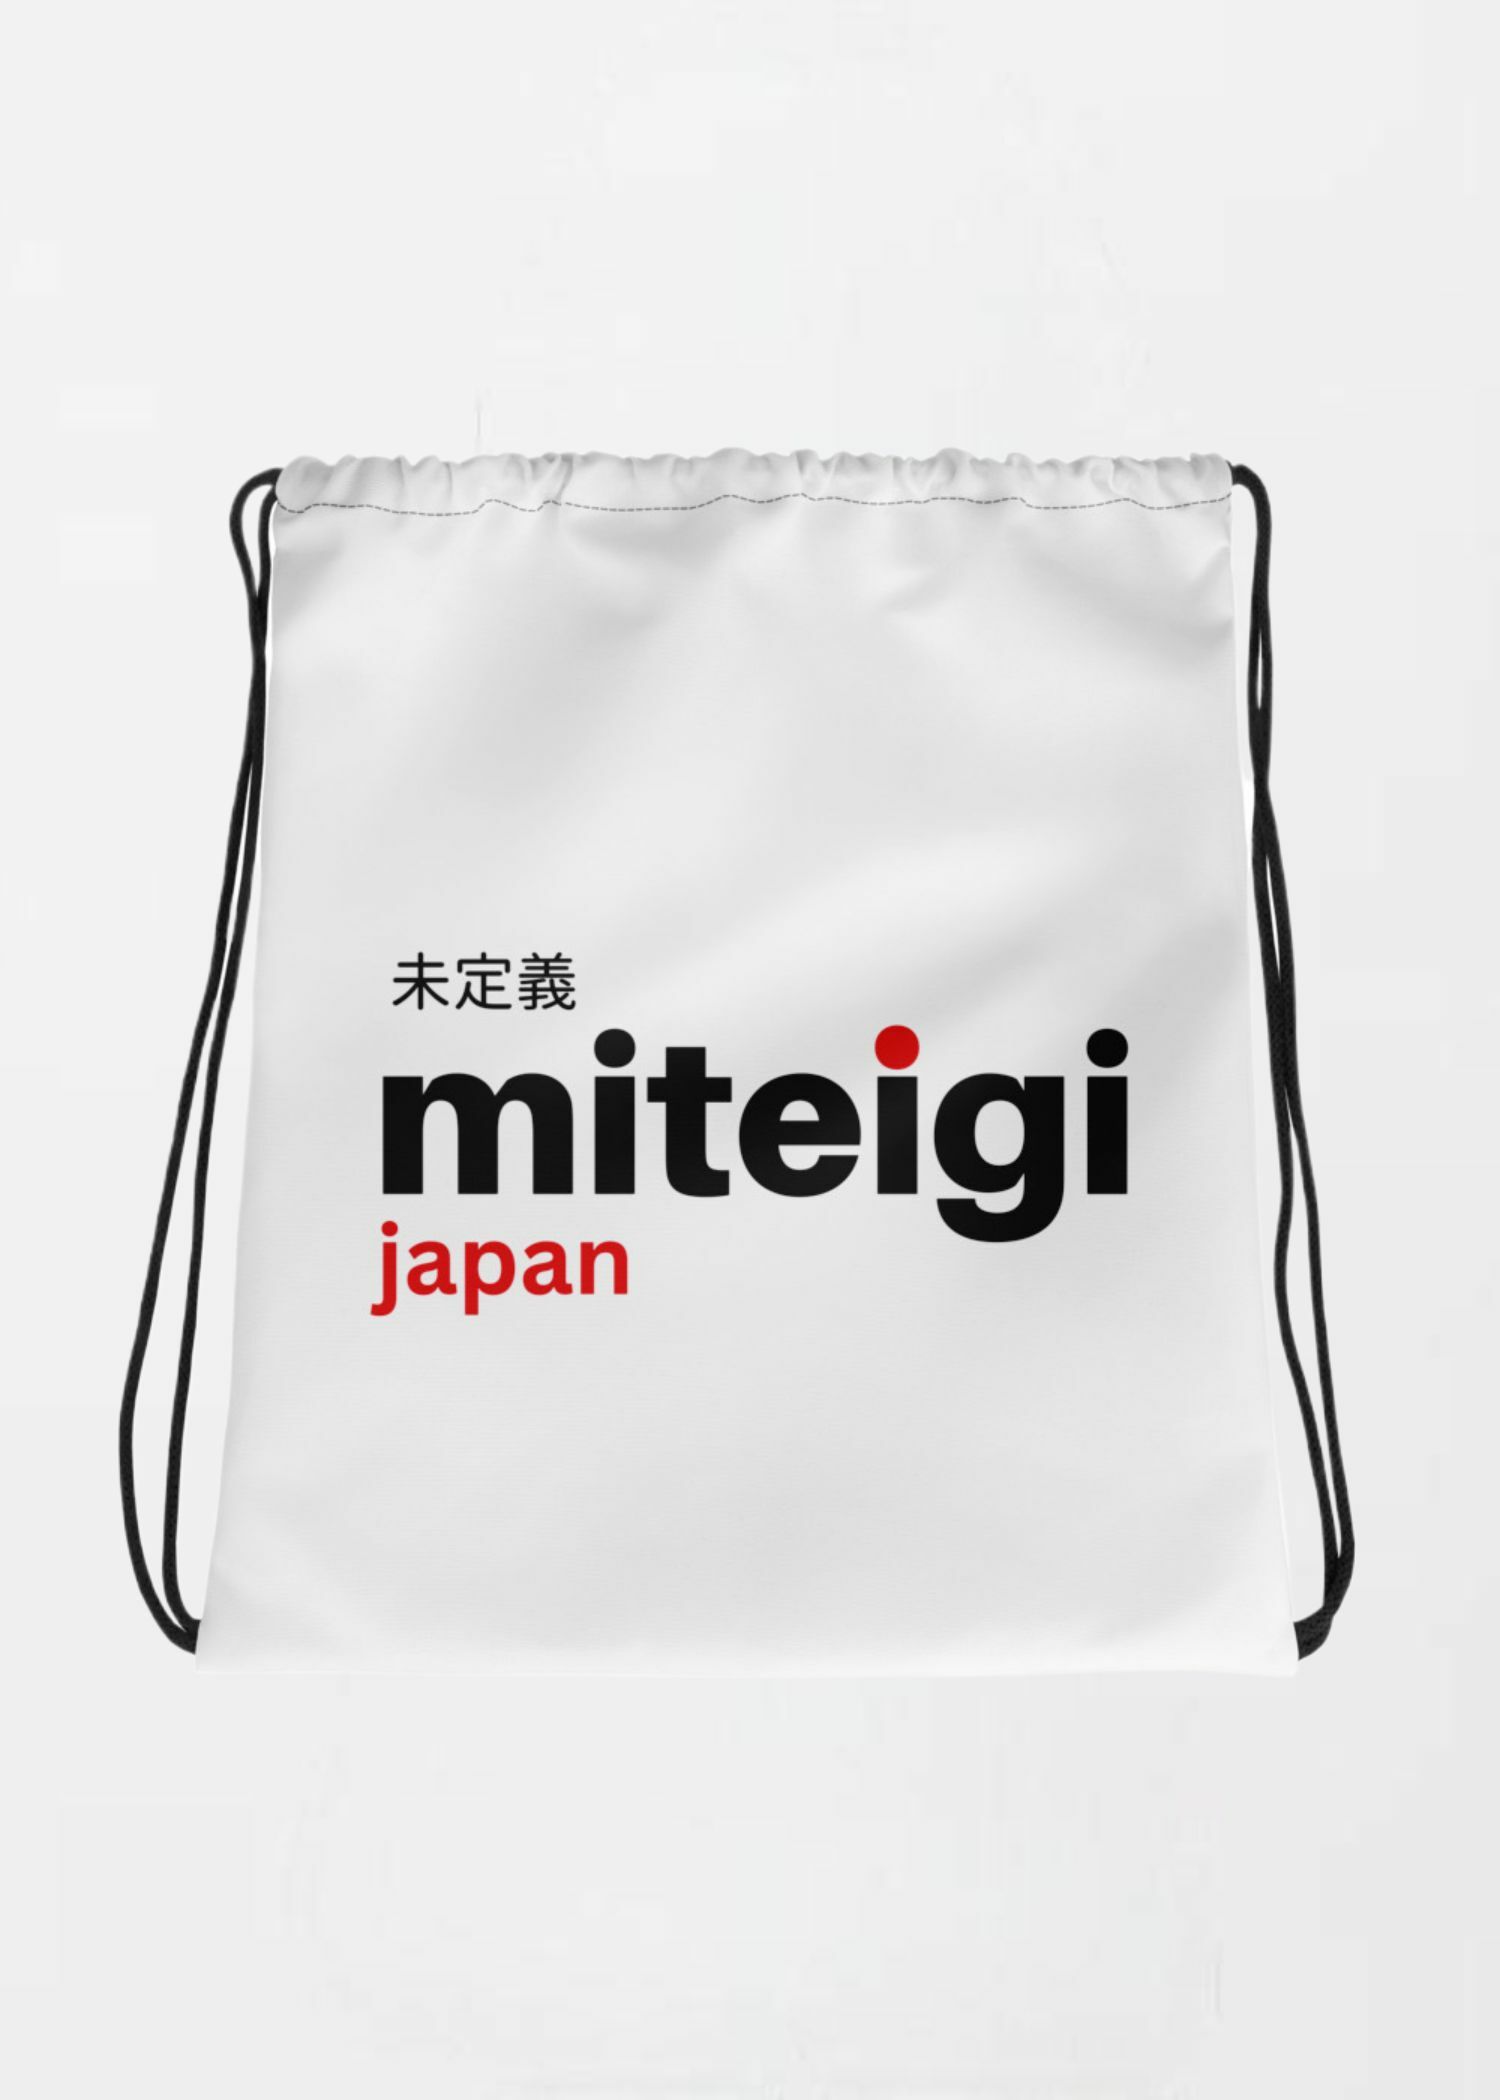 Drawstring Bag miteigi Logo miteigi-Log Branded product item miteigiYūki Fitness Sports Activewear by miteigi products brand items luggage baggage bags White